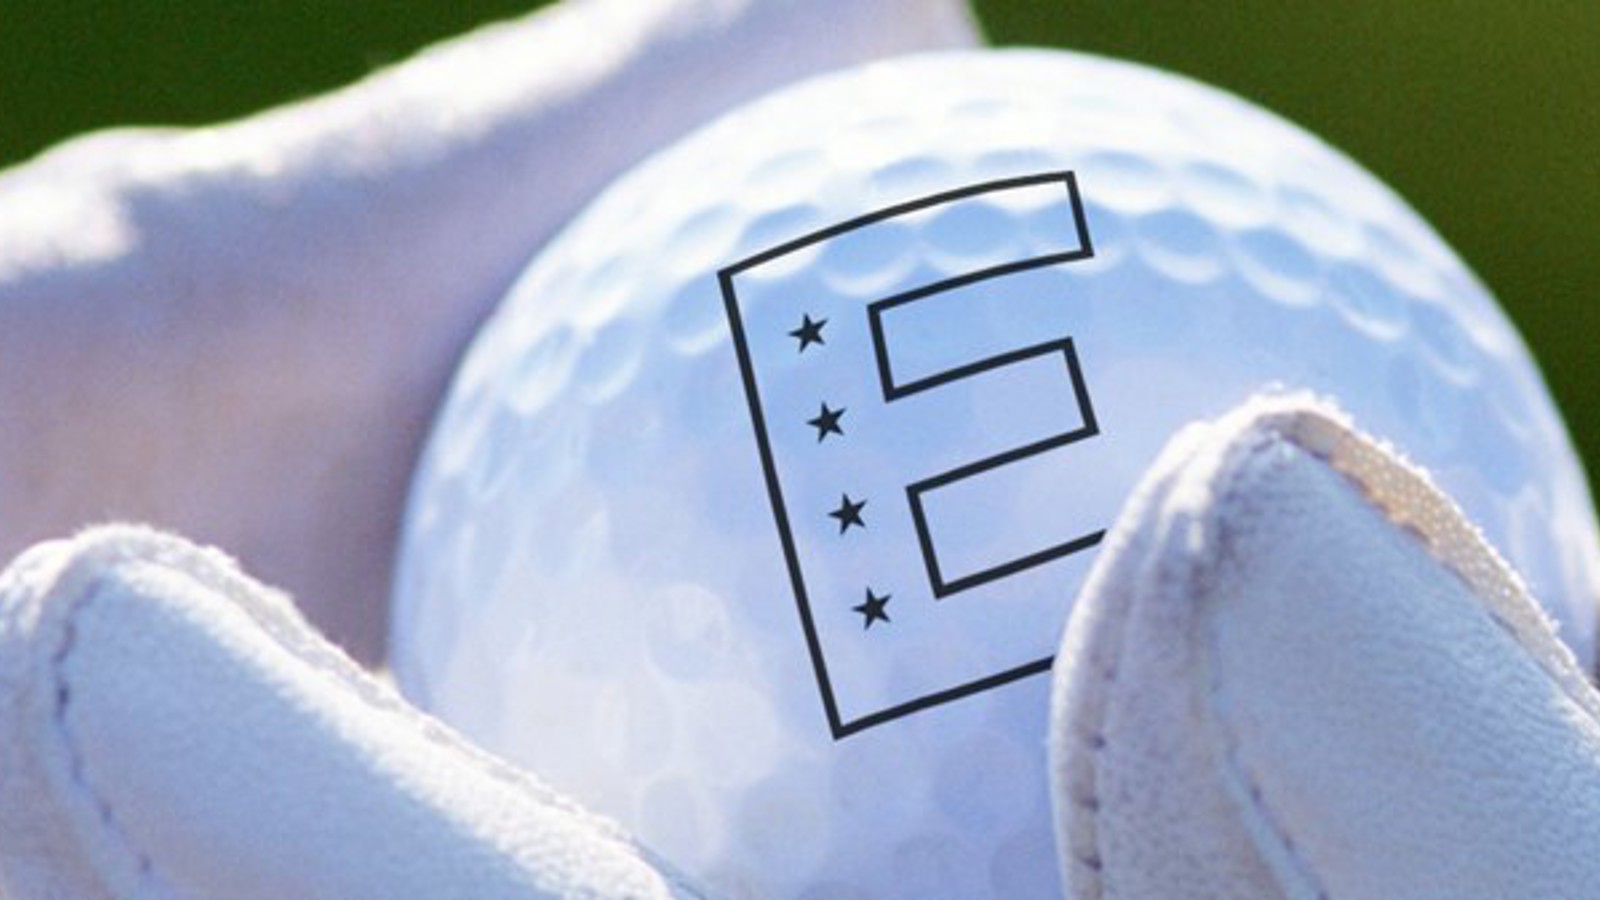 Golf ball with Elite Hotel logo